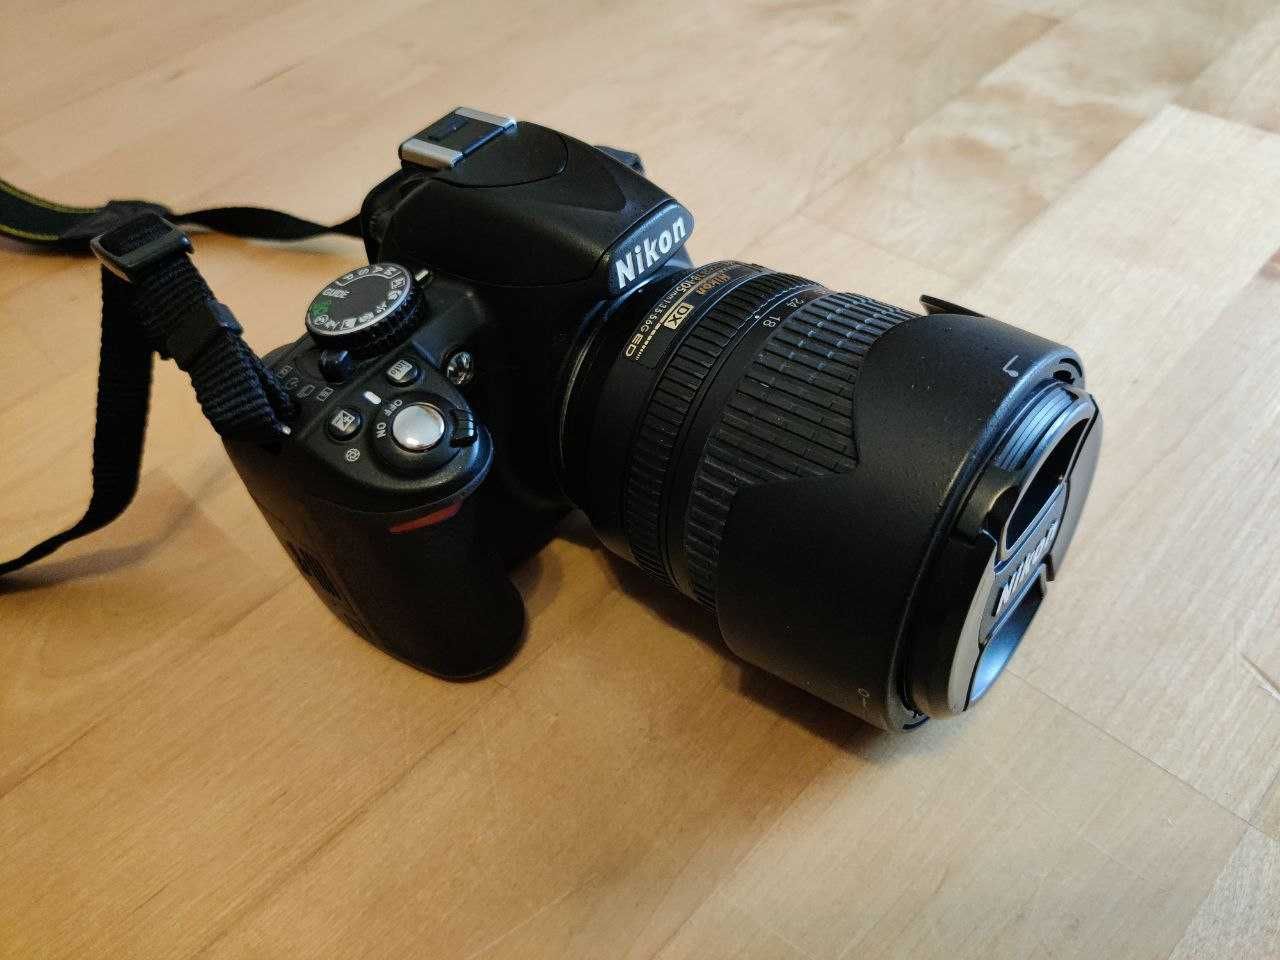 Aparat Nikon D3100 + obiektyw Nikkor 18-105mm VR